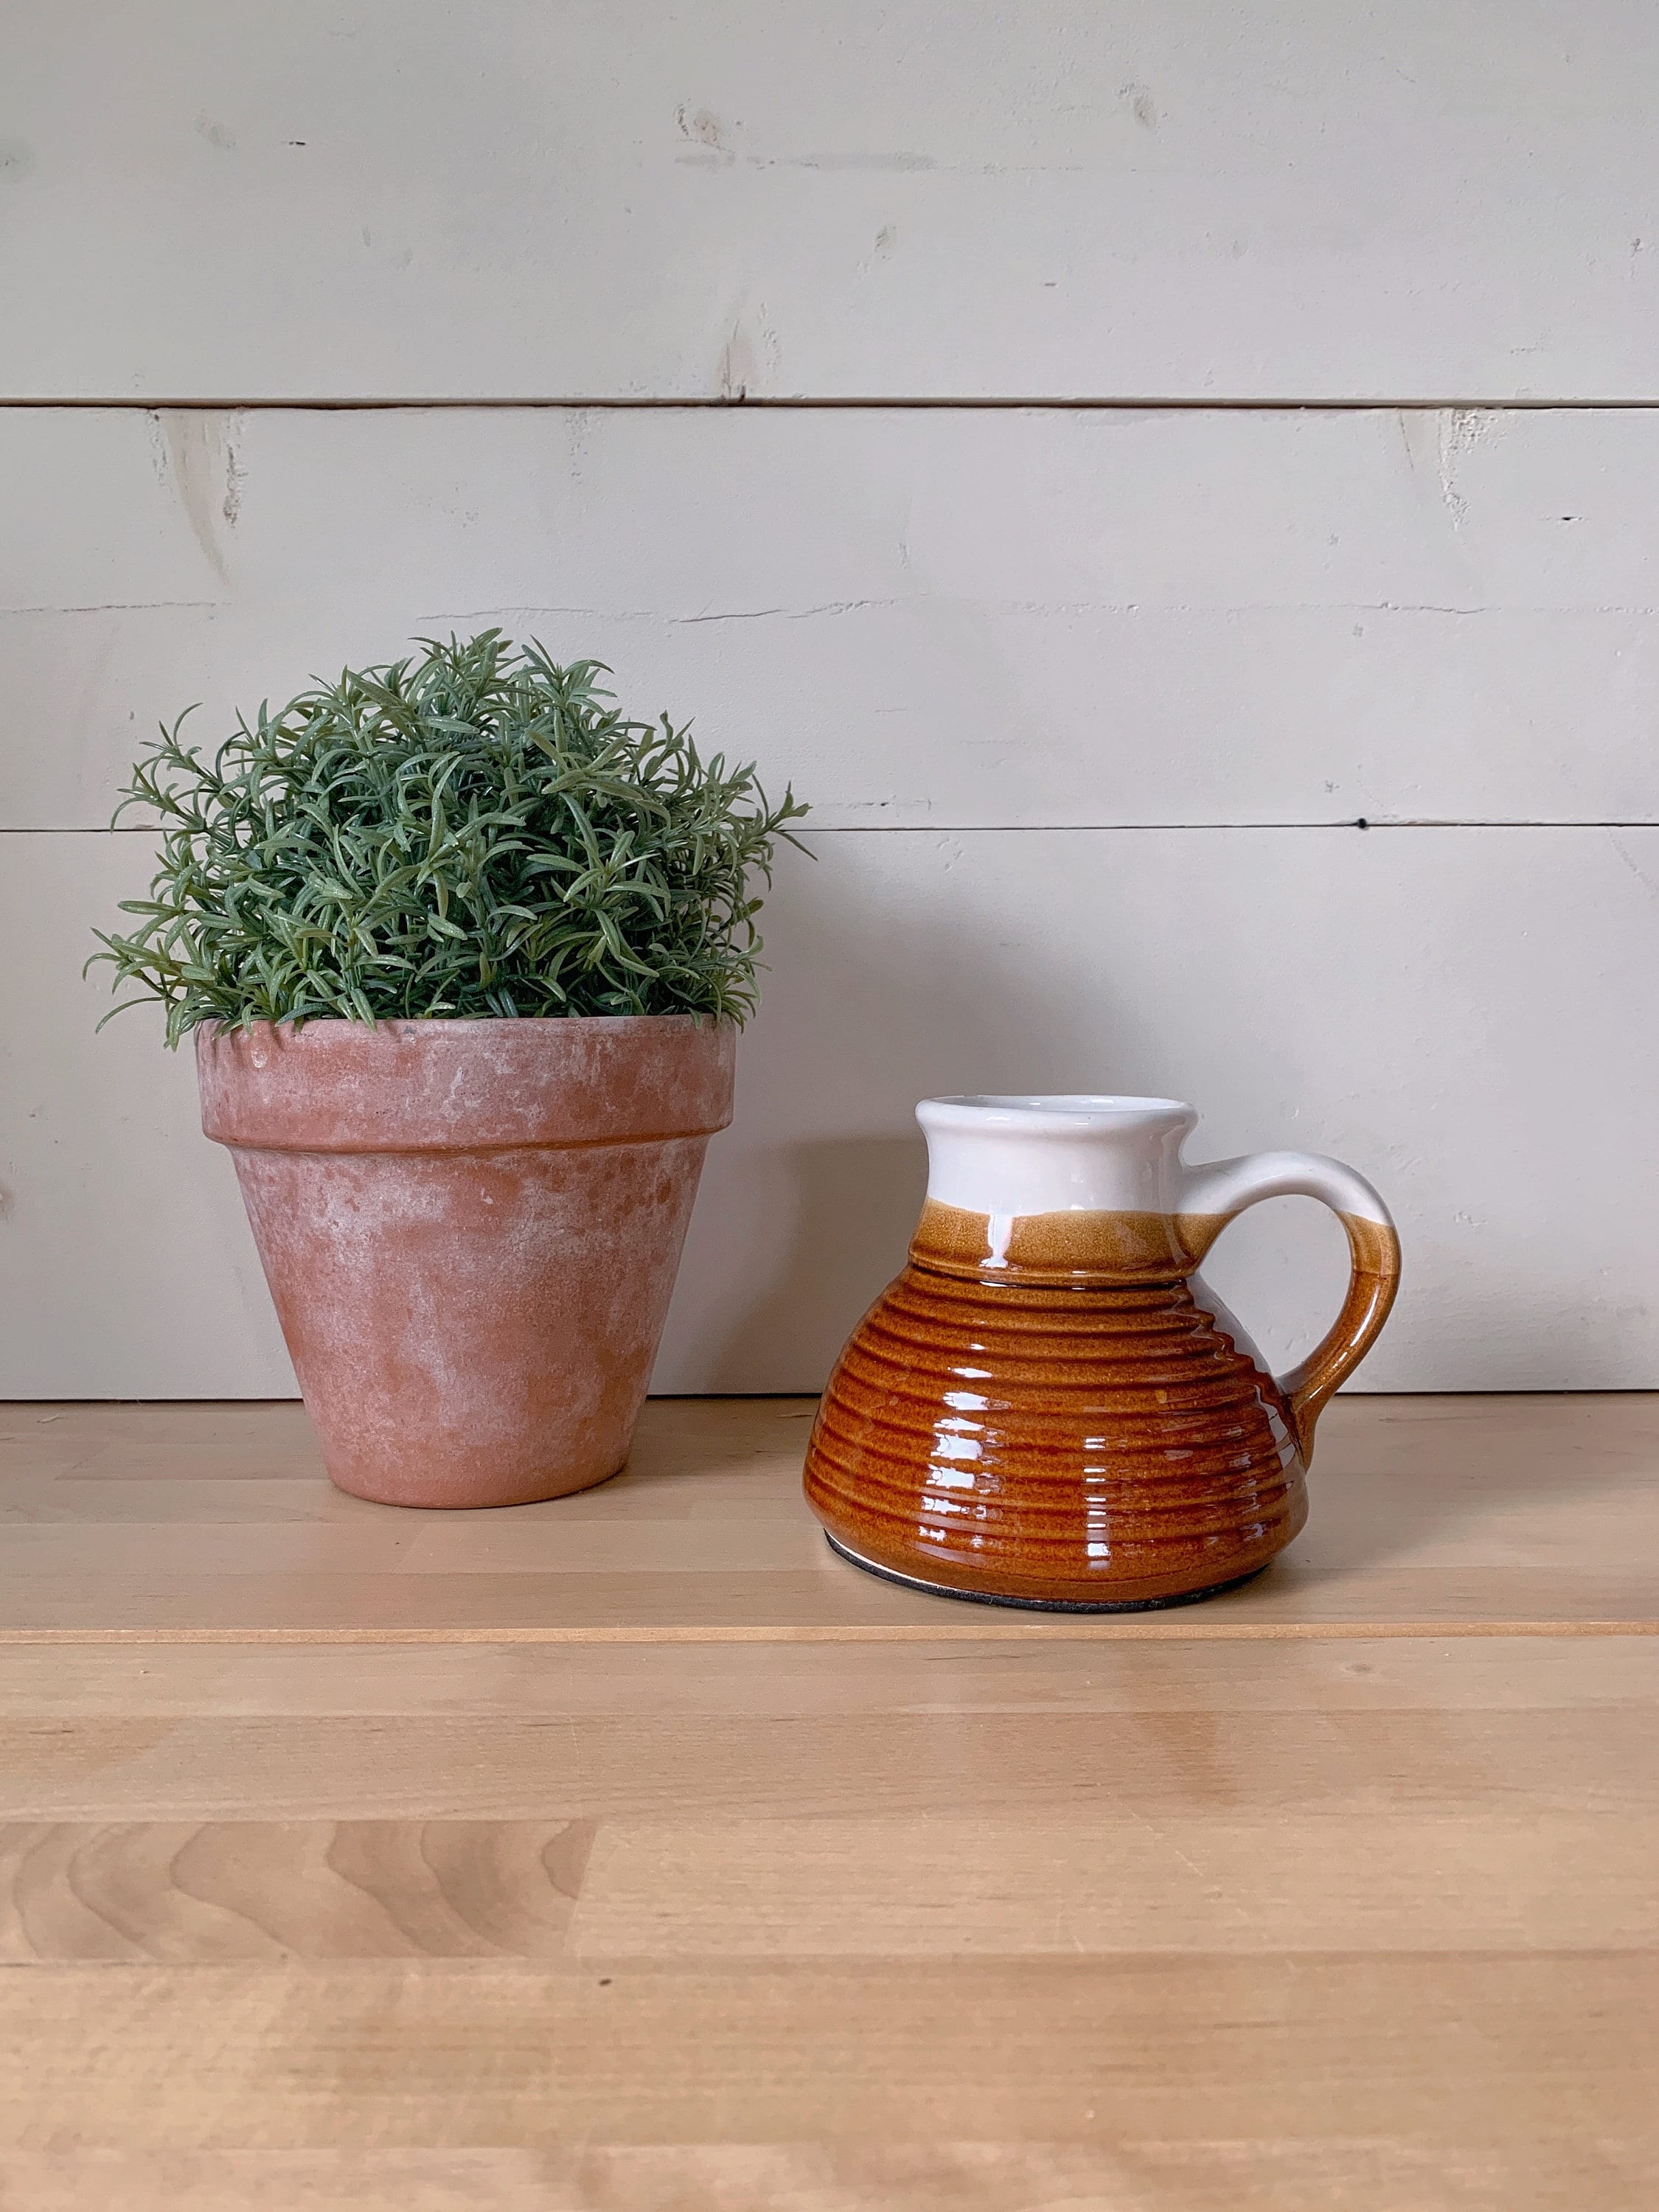 White Ceramic No Spill Mug Set | Vintage Non Spill Coffee or Tea Cups